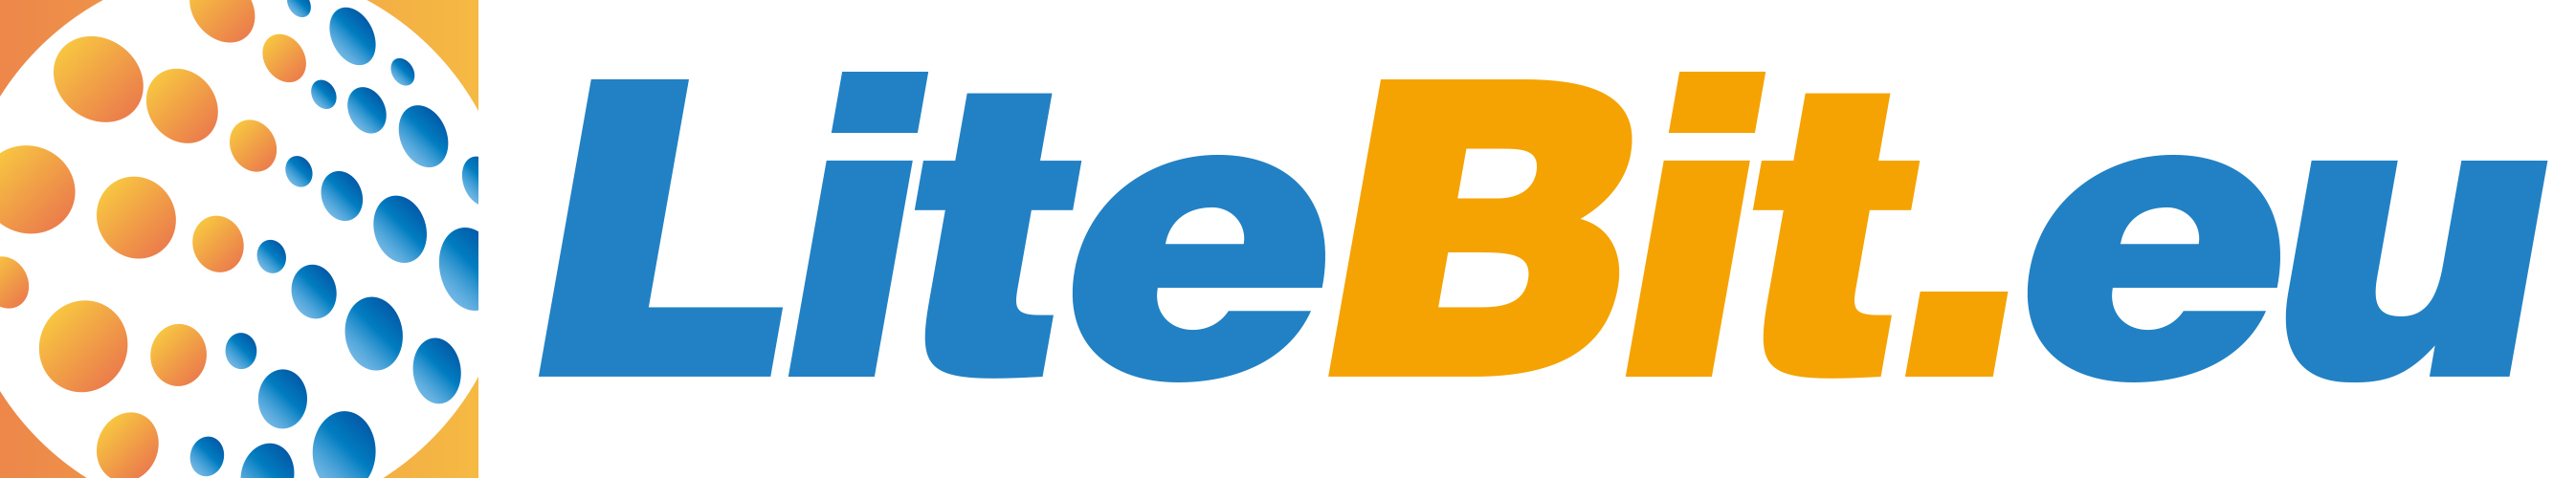 logo_litebit_2016